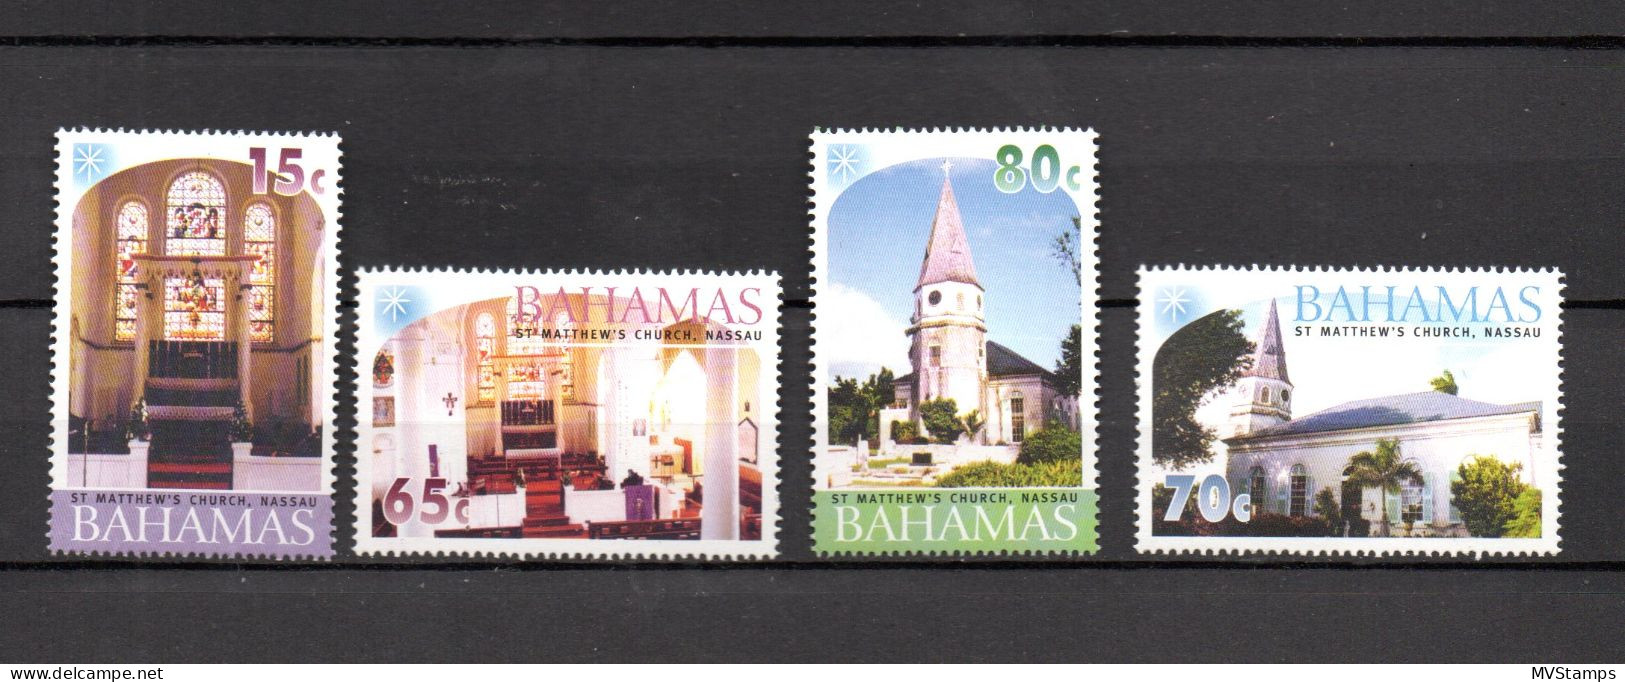 Bahamas 2003 Set St Matthews Angelican Church Stamps (Michel 1159/62) MNH - Bahamas (1973-...)